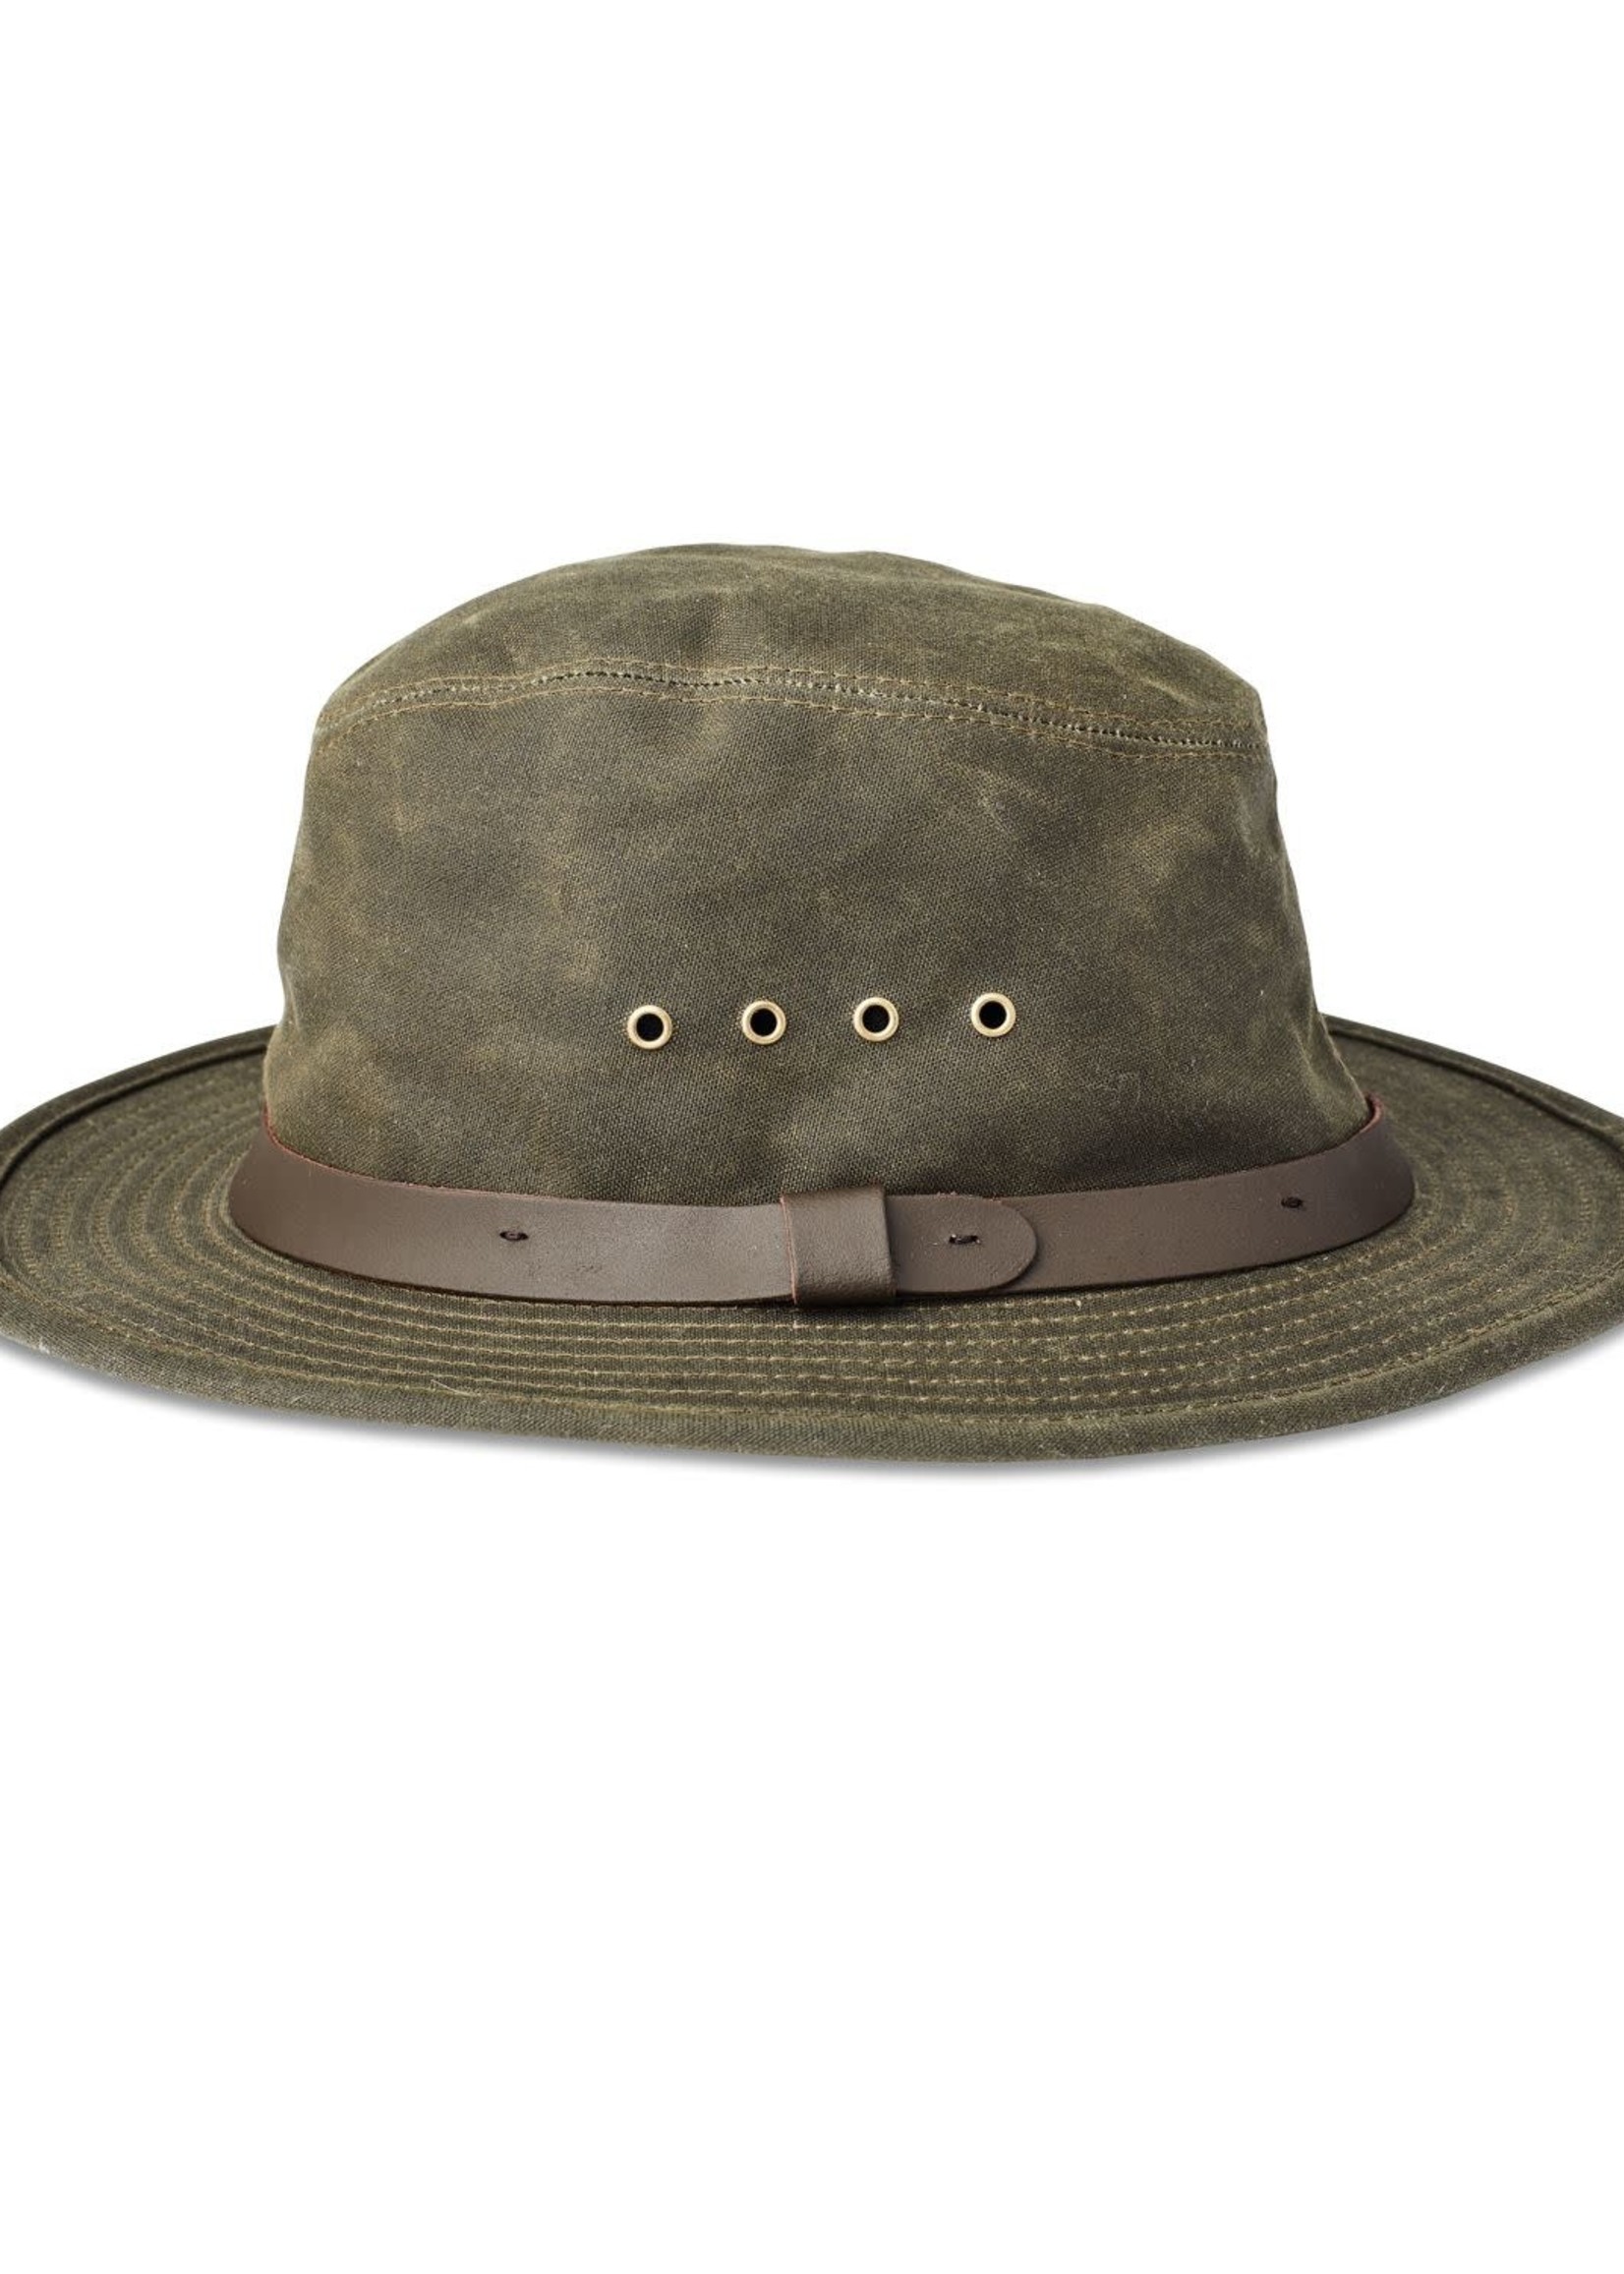 Tin Packer Hat: OtterGreen - Riverwood